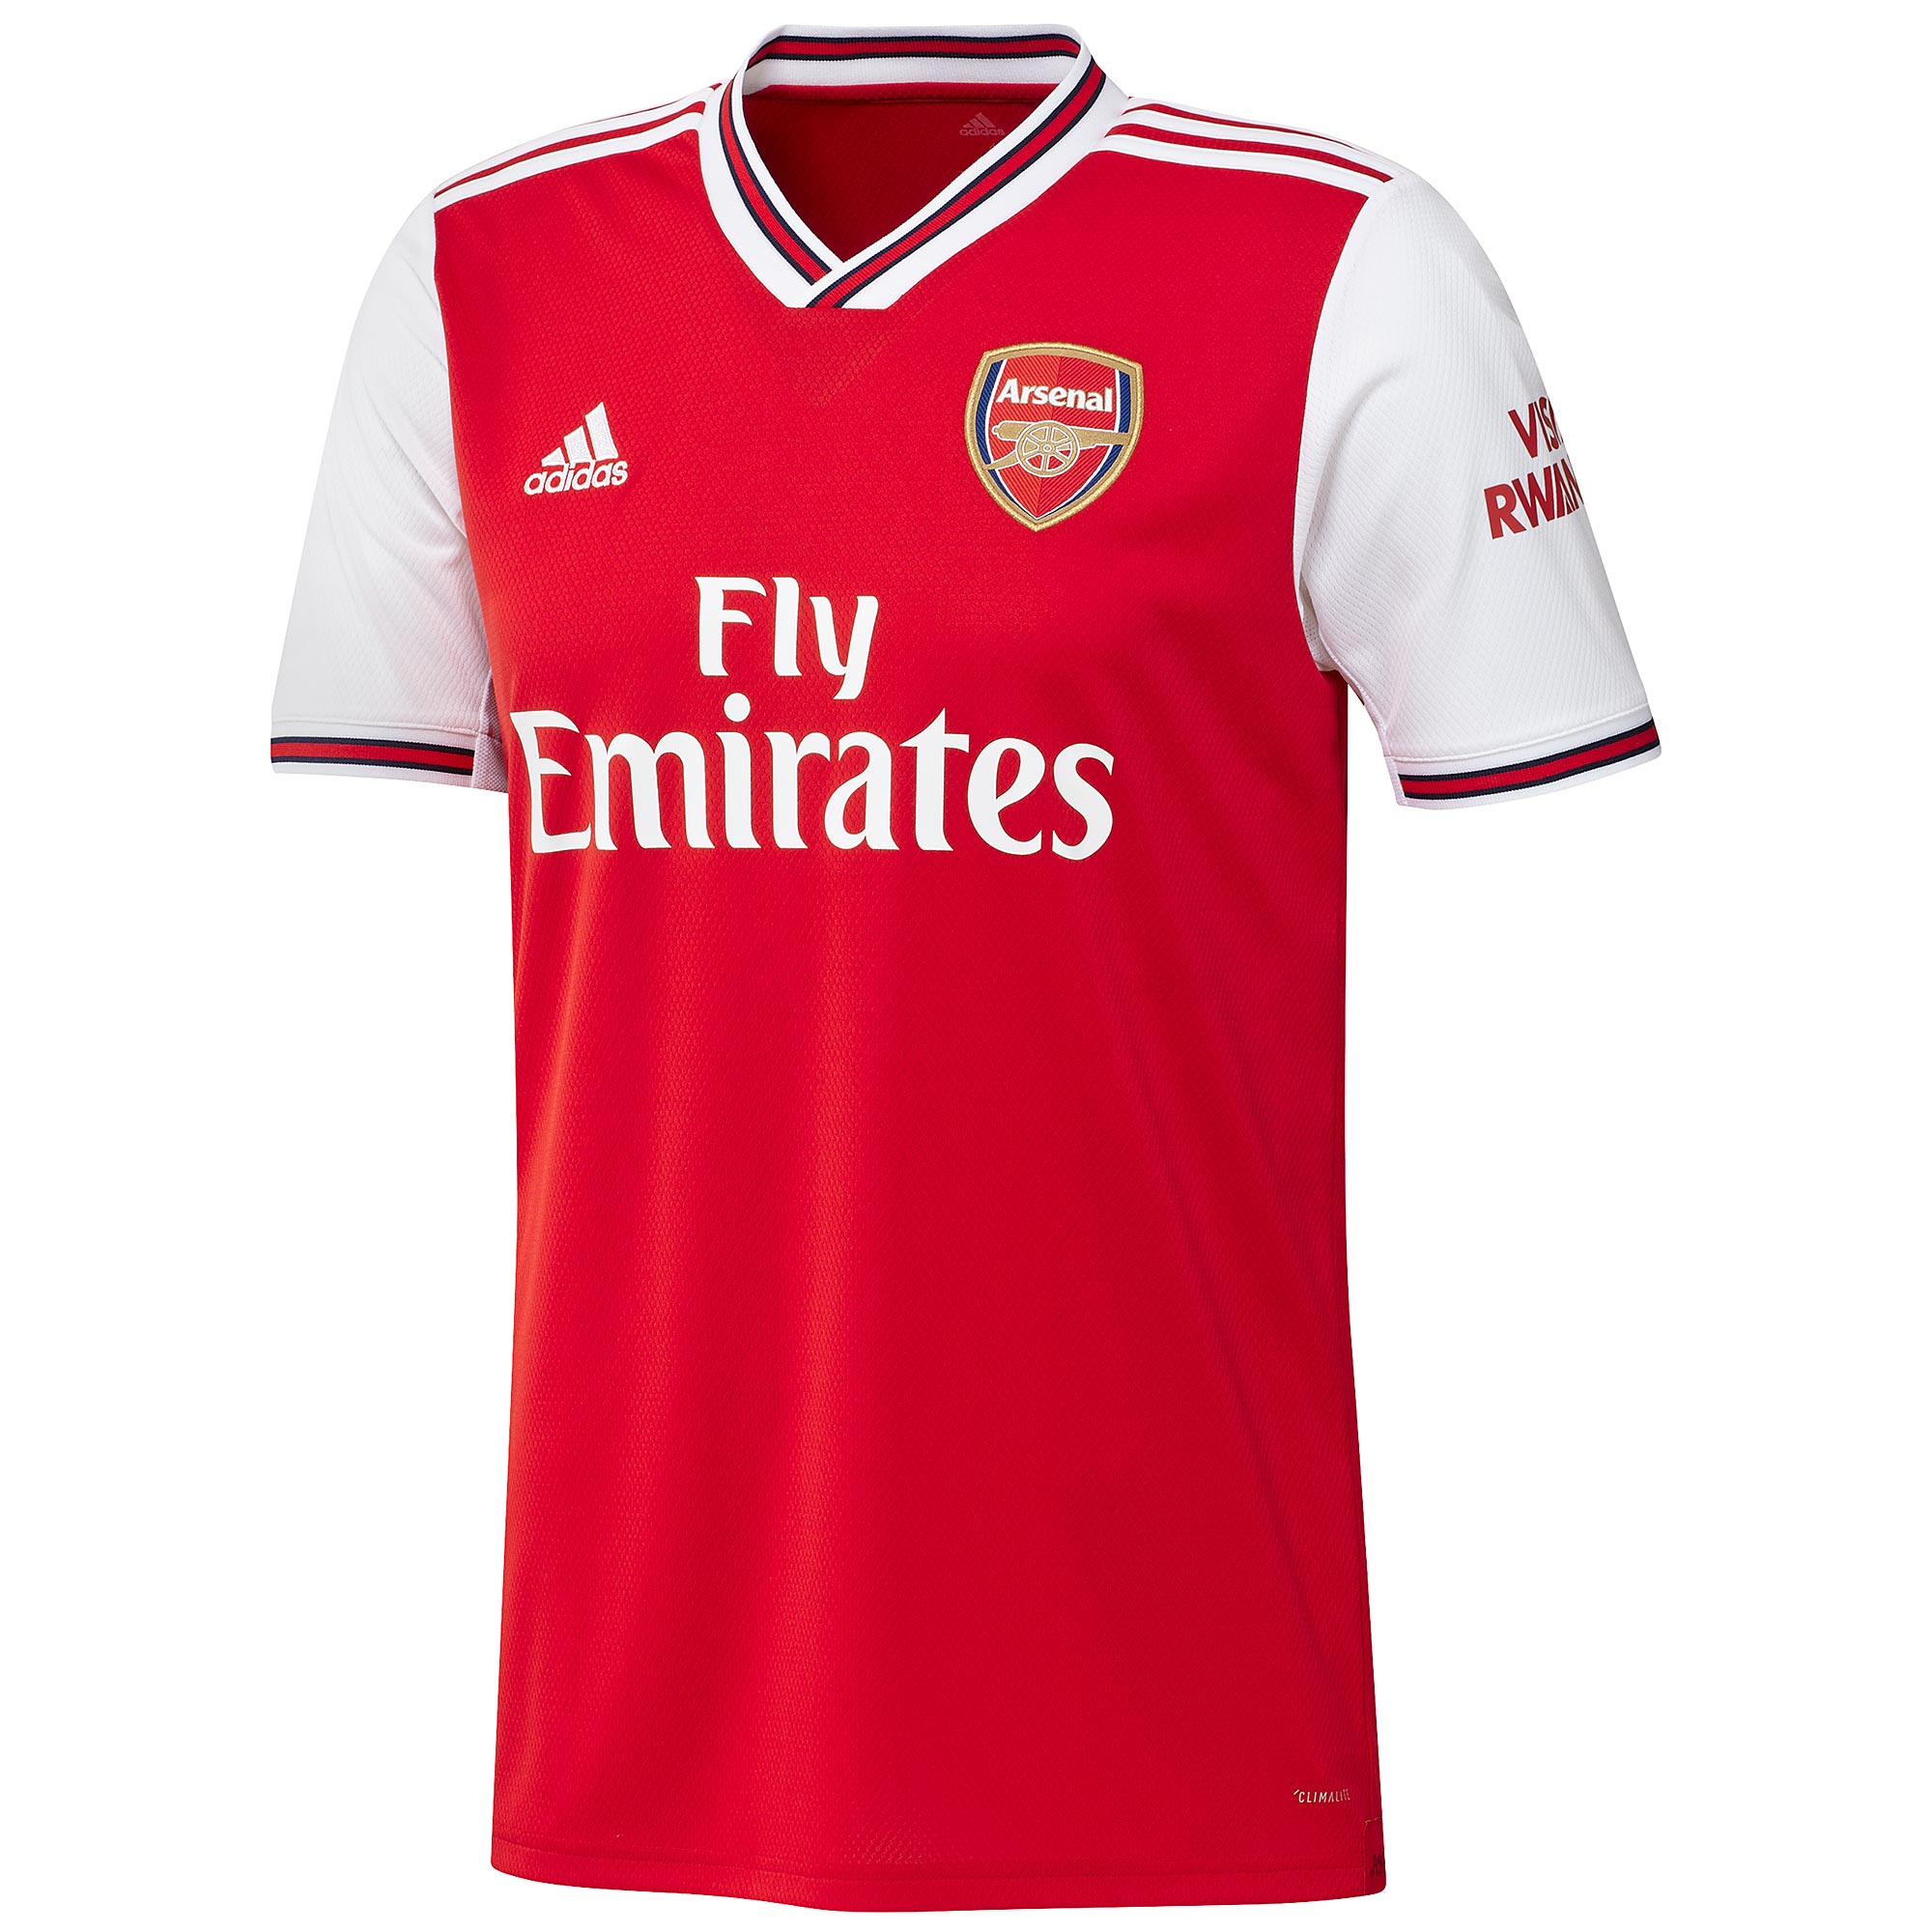 Arsenal Fc Jersey / Men's 8 Mikel Arteta Arsenal FC Jersey - 14/15 ...